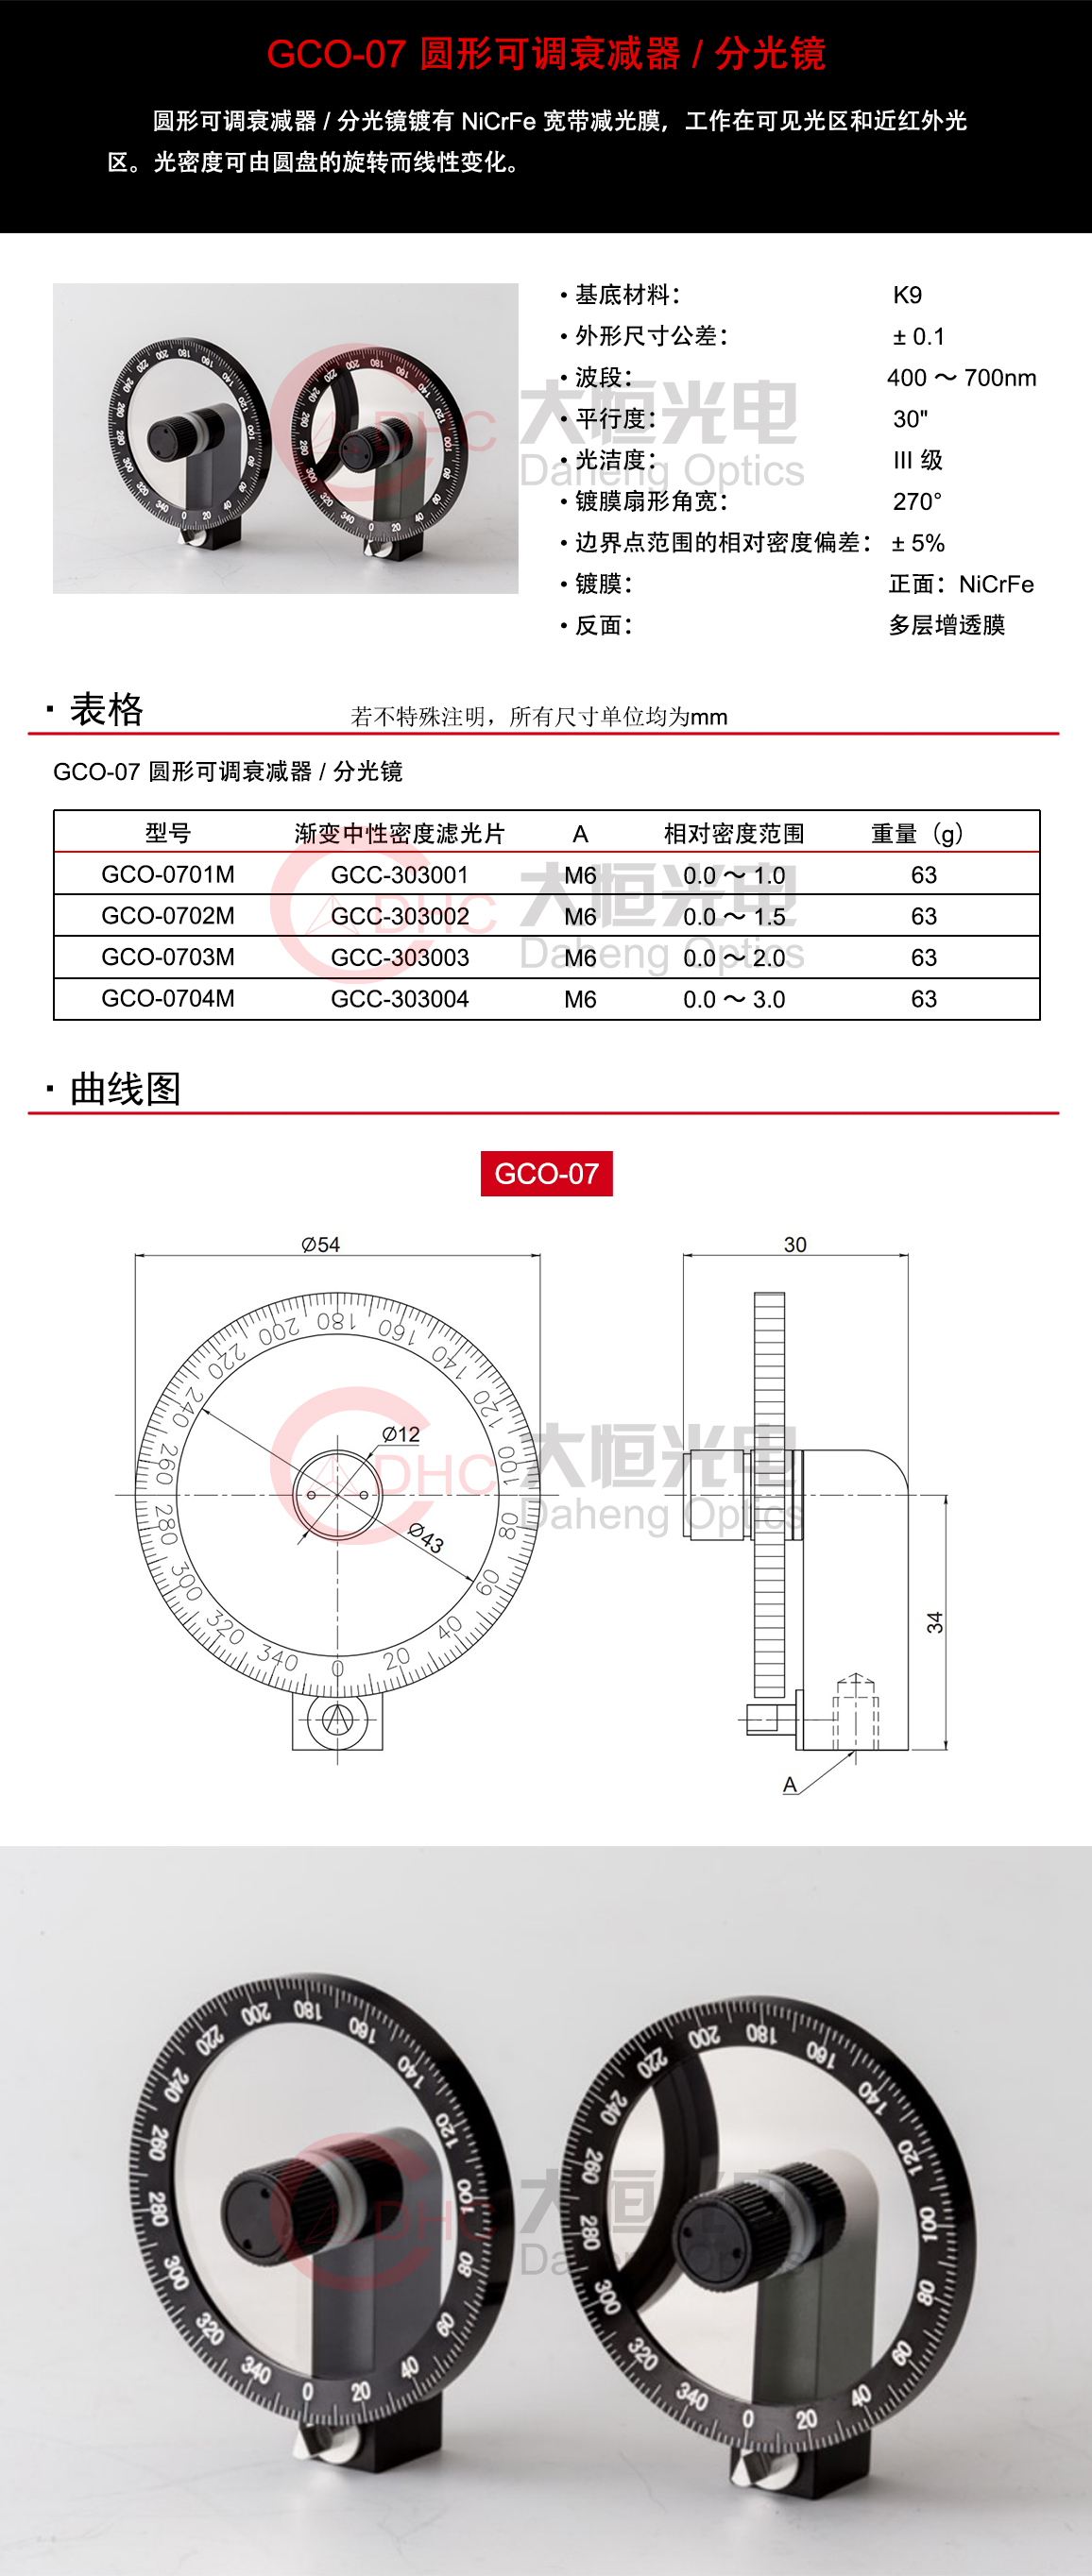 GCO-07系列圆形可调衰减器分光镜+水印.jpg